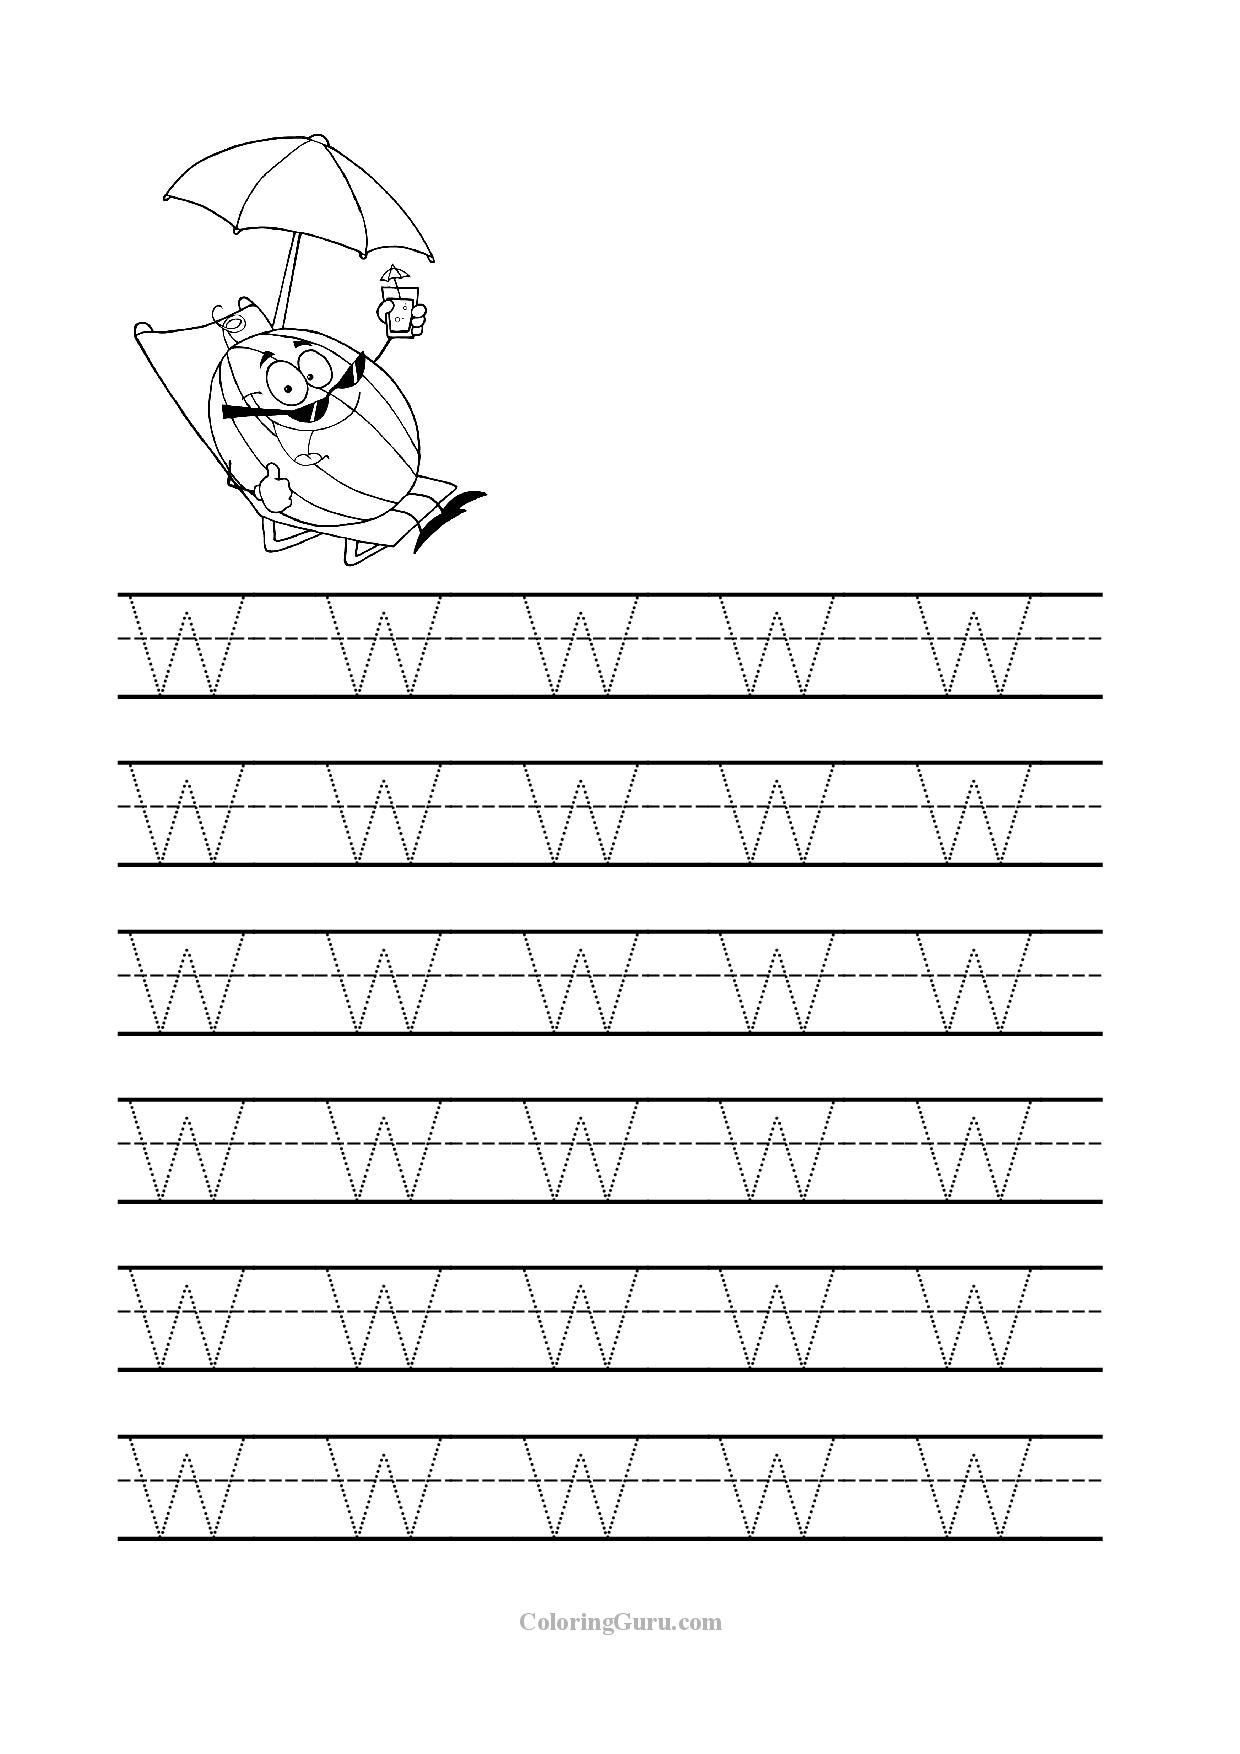 Letter W Worksheets for Preschoolers Free Printable Tracing Letter W Worksheets for Preschool